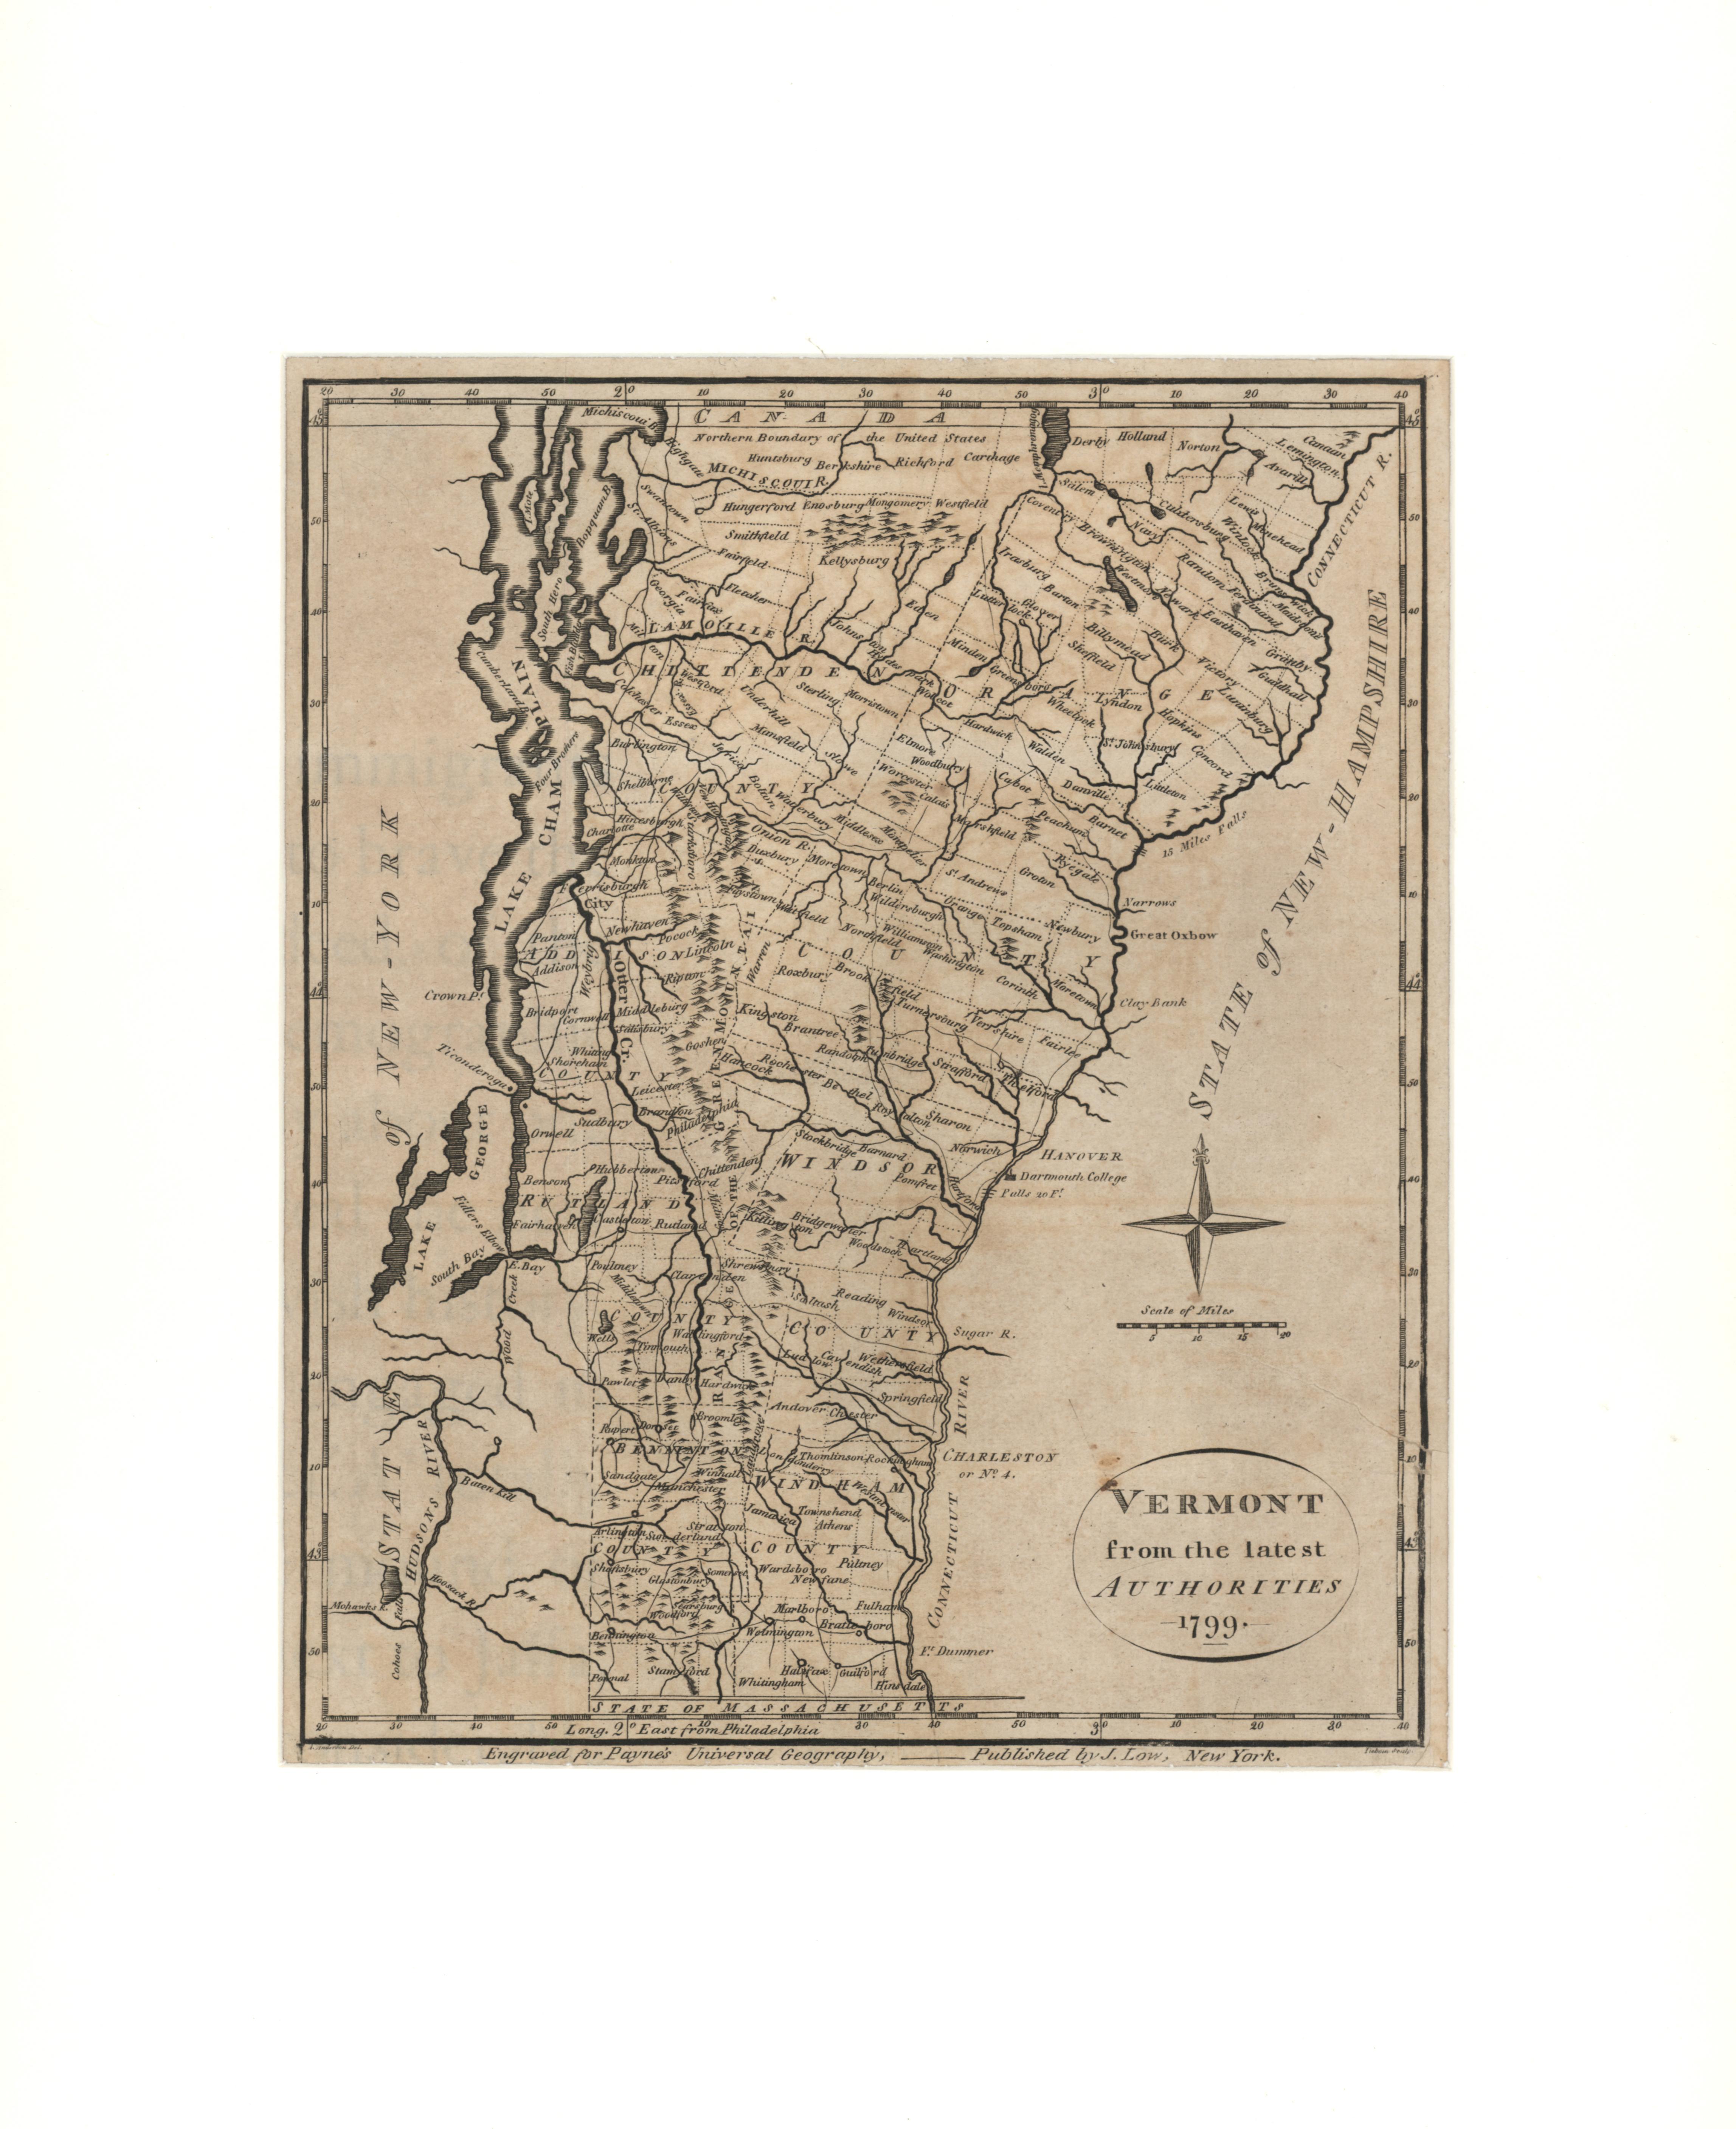 John Payne Print - Vermont from the latest Authorities. 1799. 